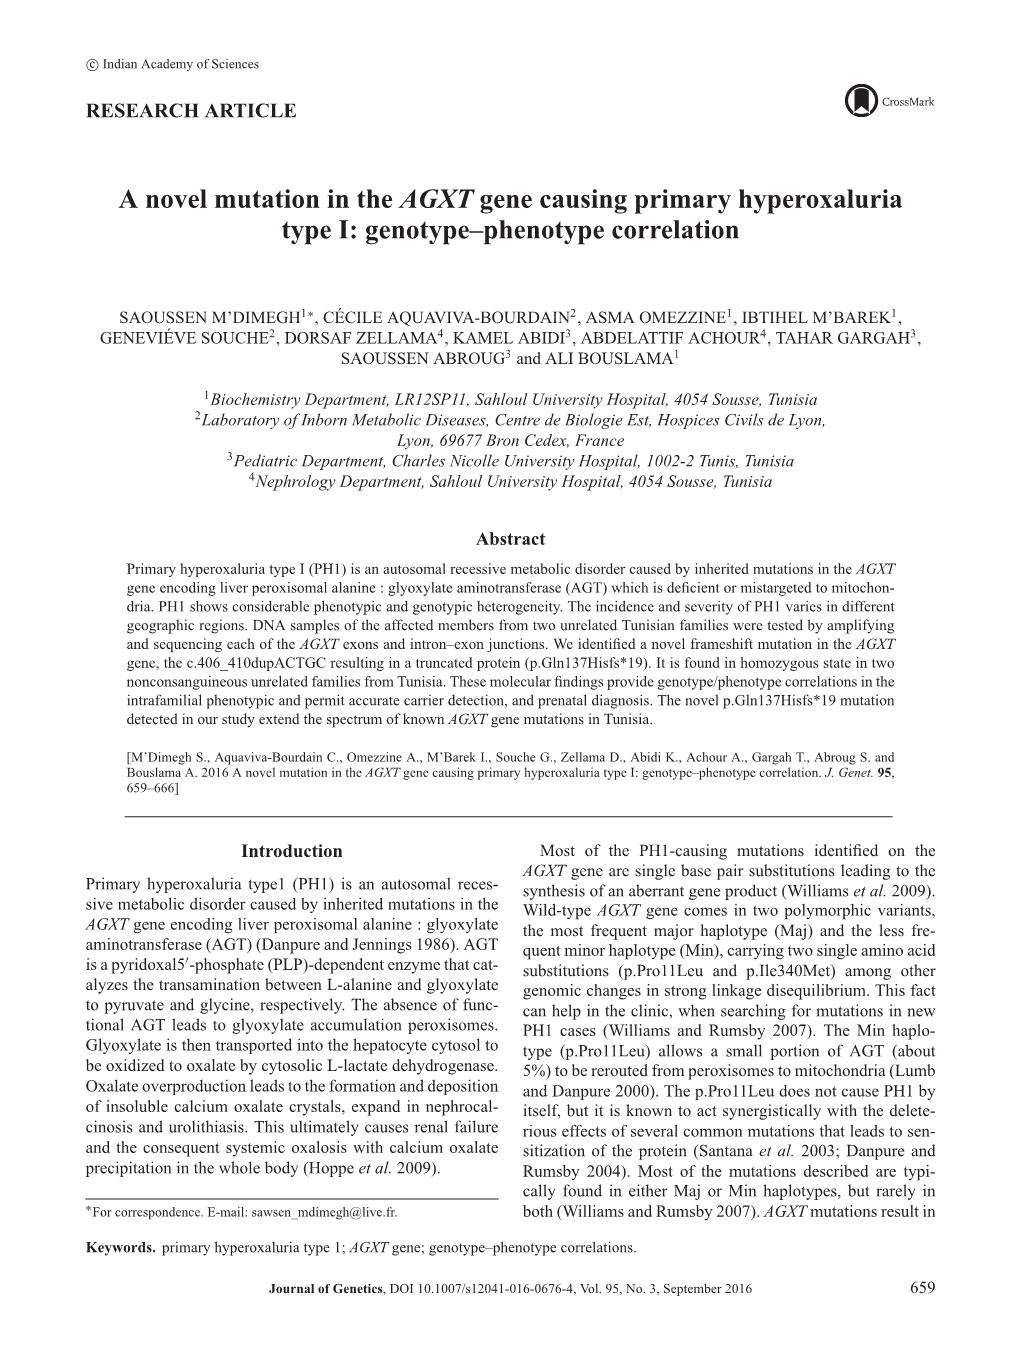 A Novel Mutation in the AGXT Gene Causing Primary Hyperoxaluria Type I: Genotype–Phenotype Correlation